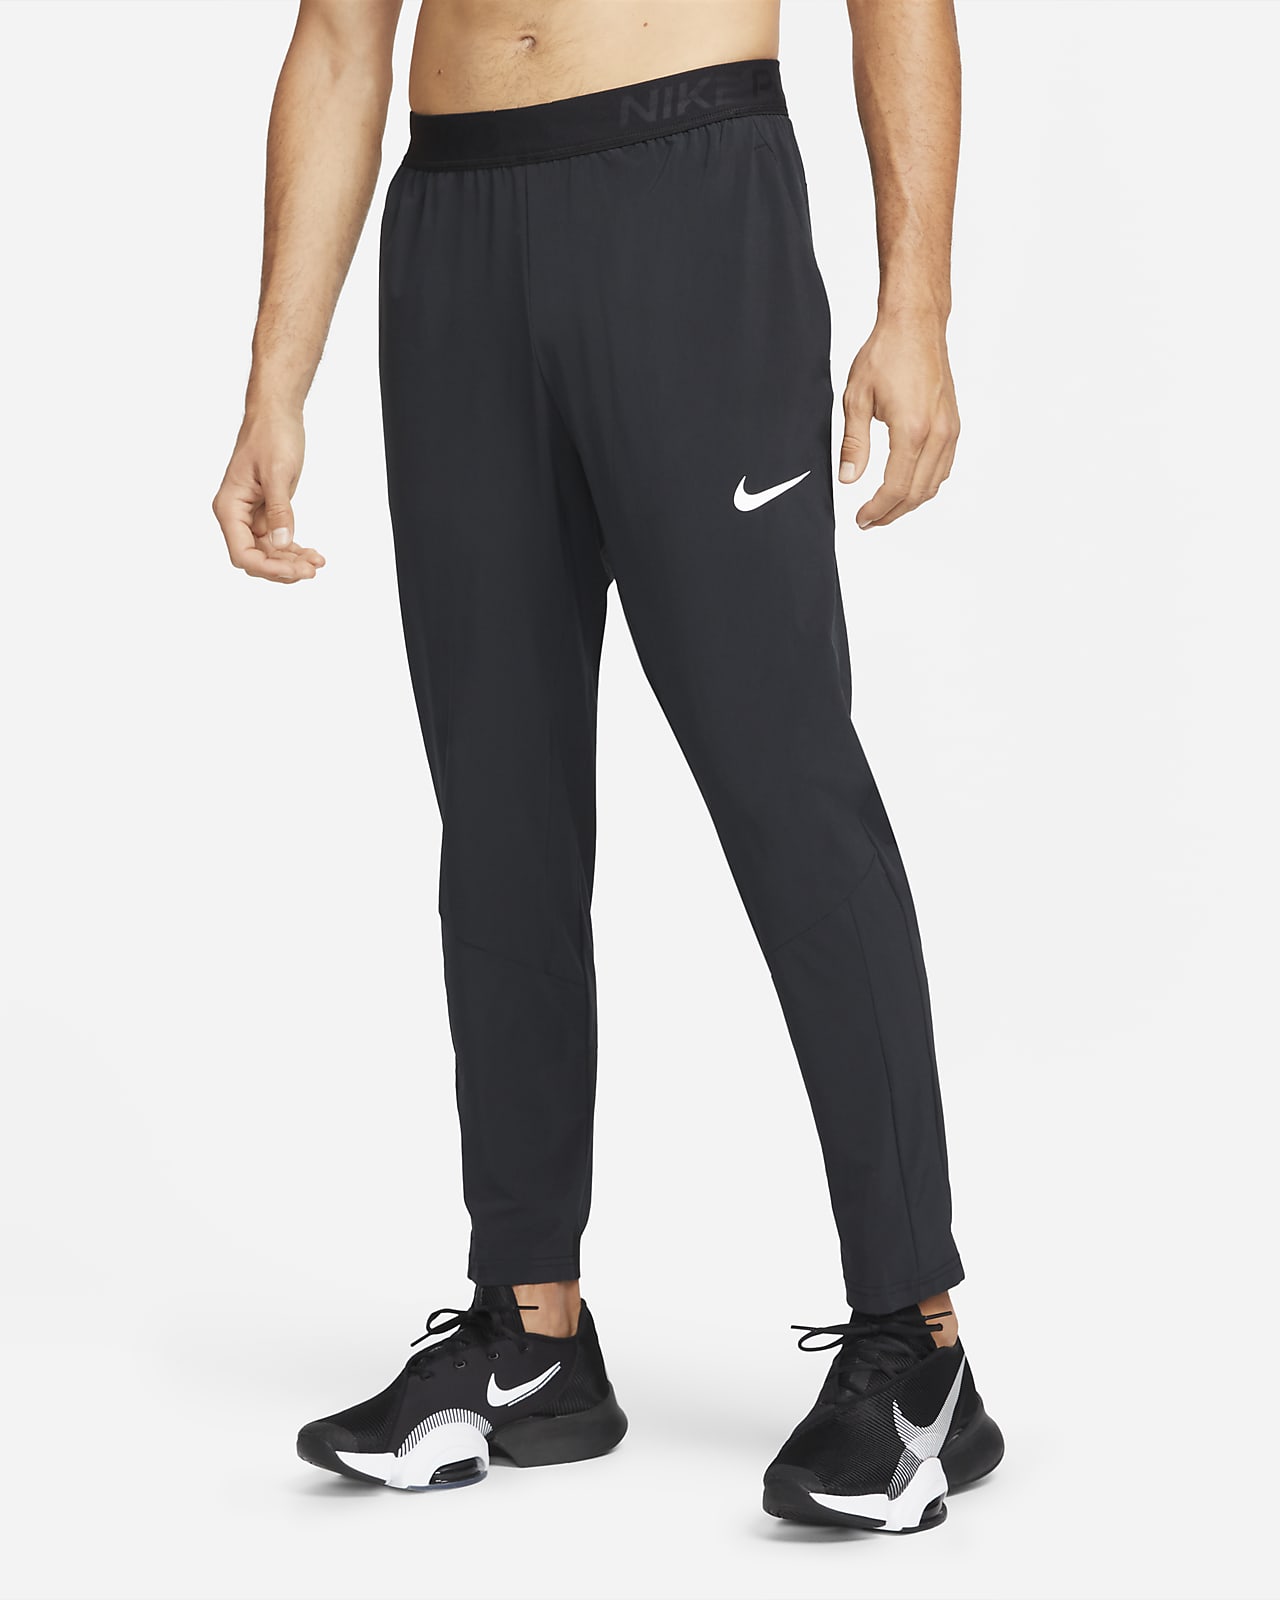 Kammerat forbandelse interpersonel Nike Pro Dri-FIT Vent Max Men's Training Pants. Nike.com